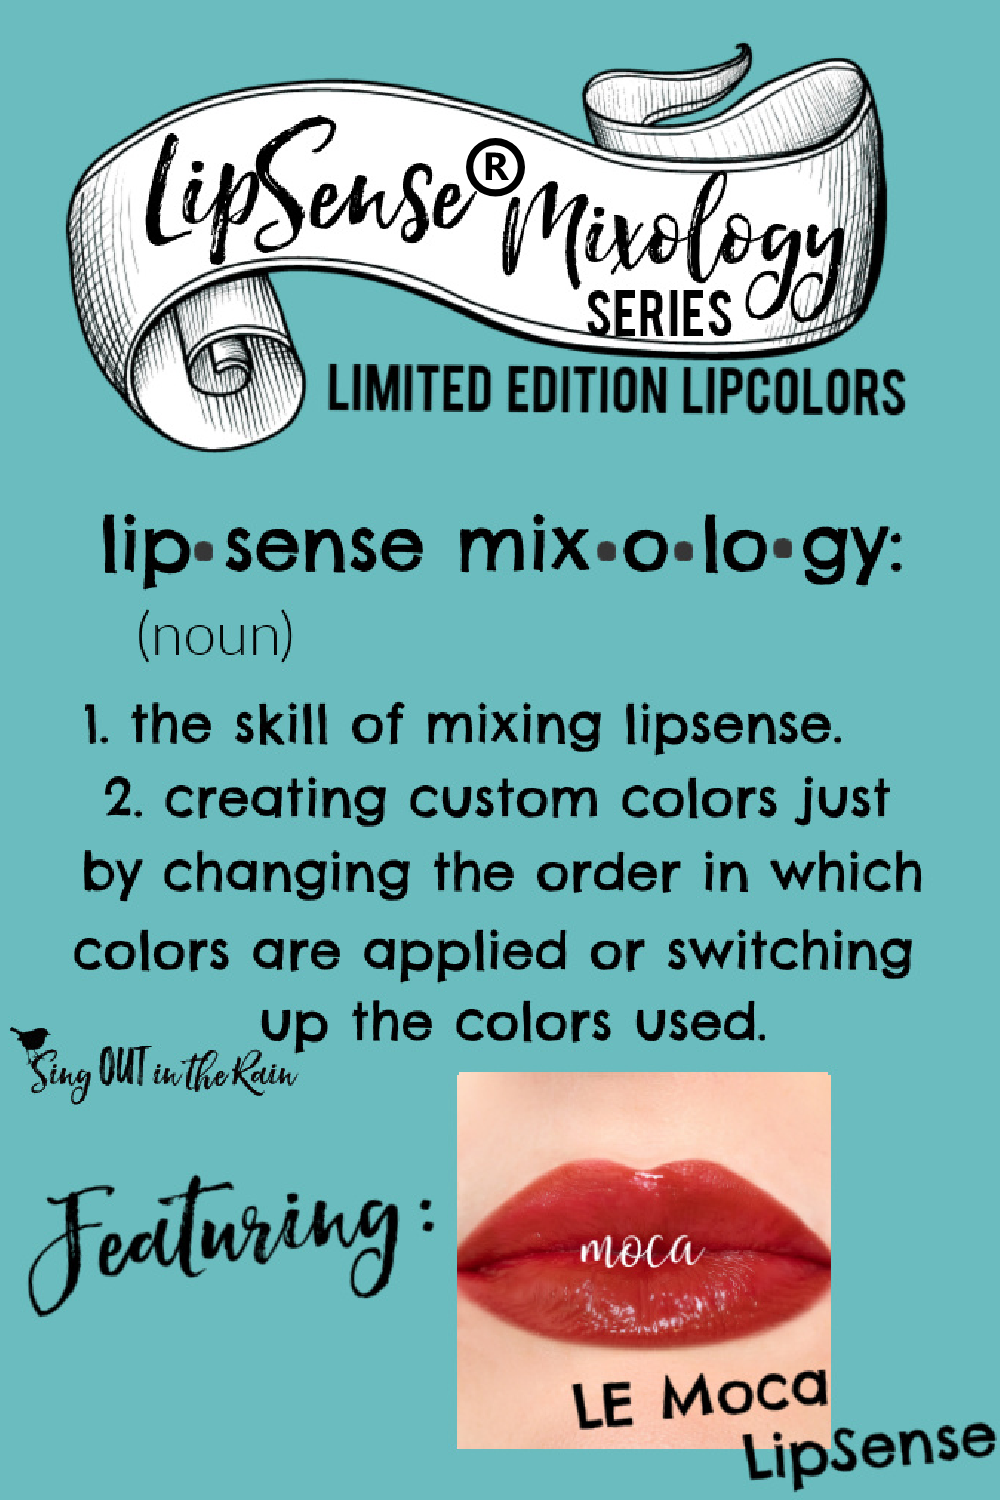 The Ultimate Guide to Moca LipSense Mixology